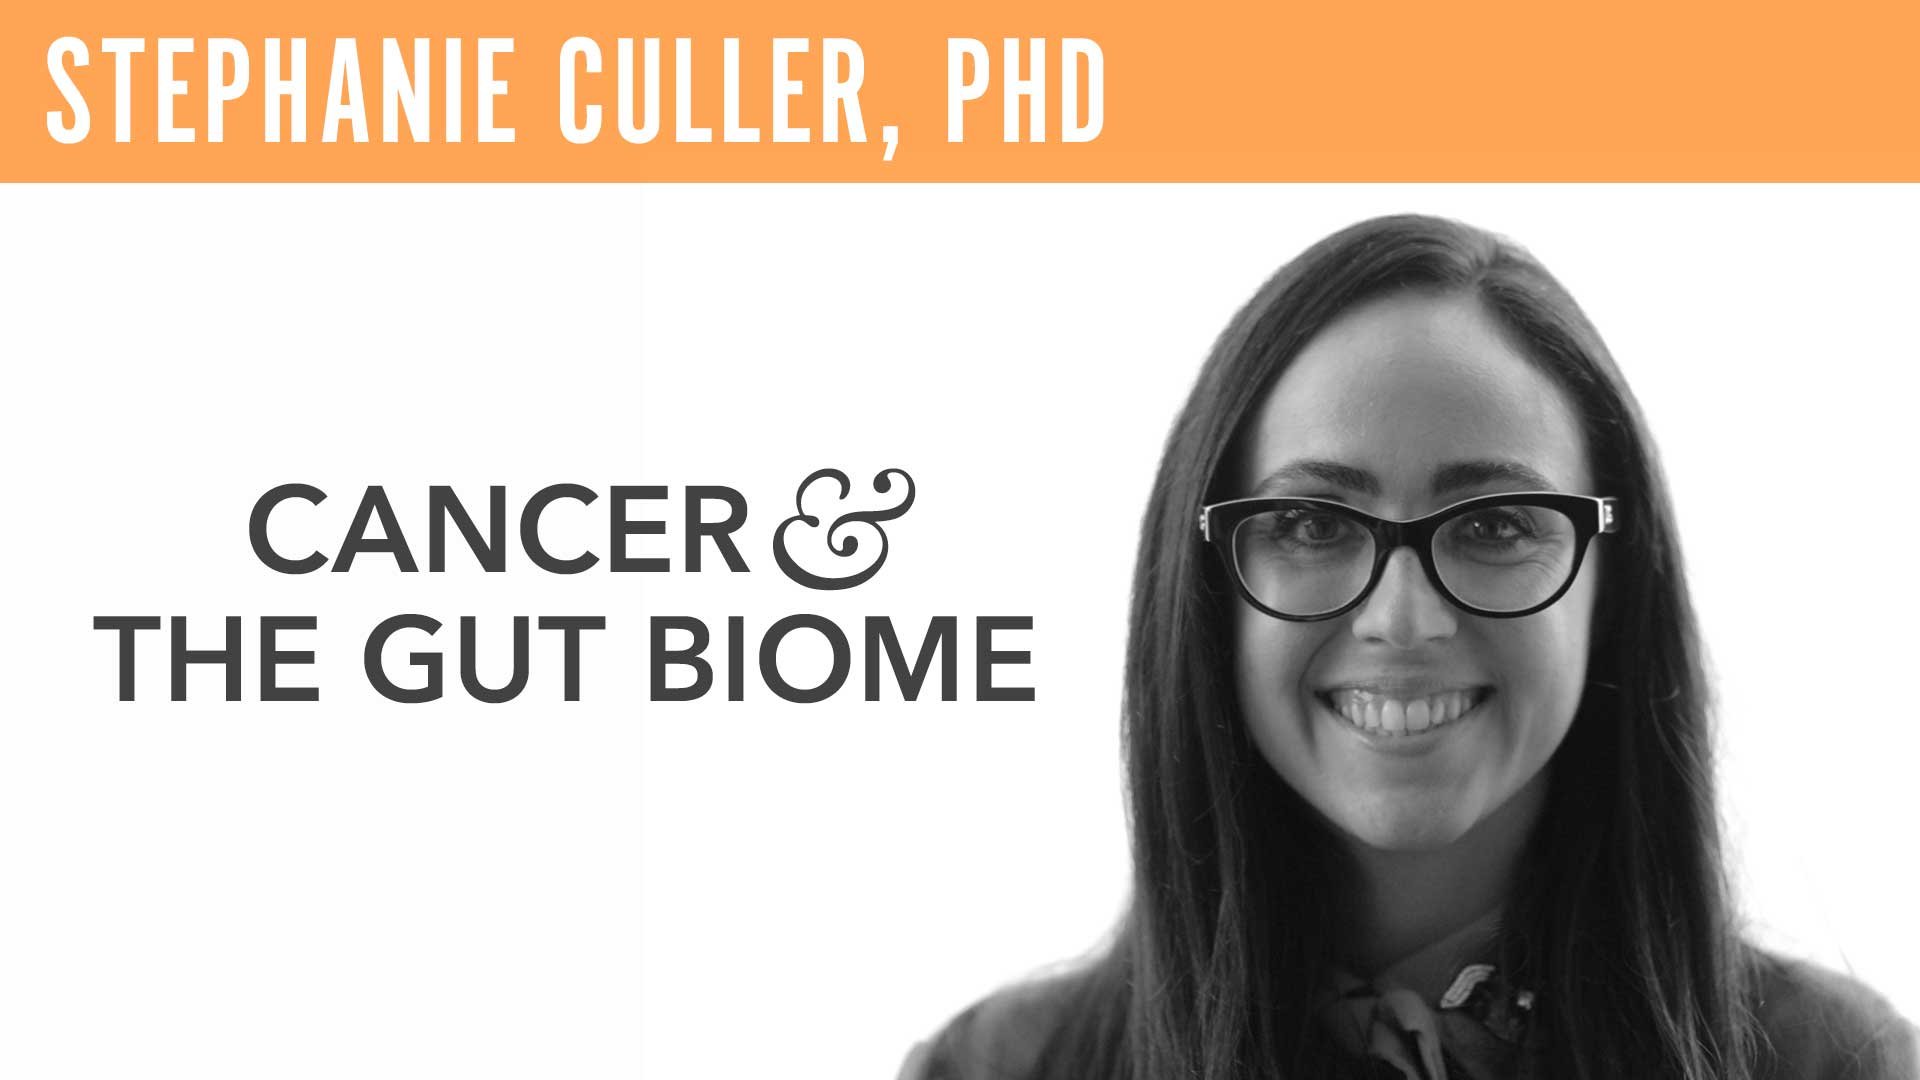 Stephanie Culler, PhD "Cancer & the Gut Biome"